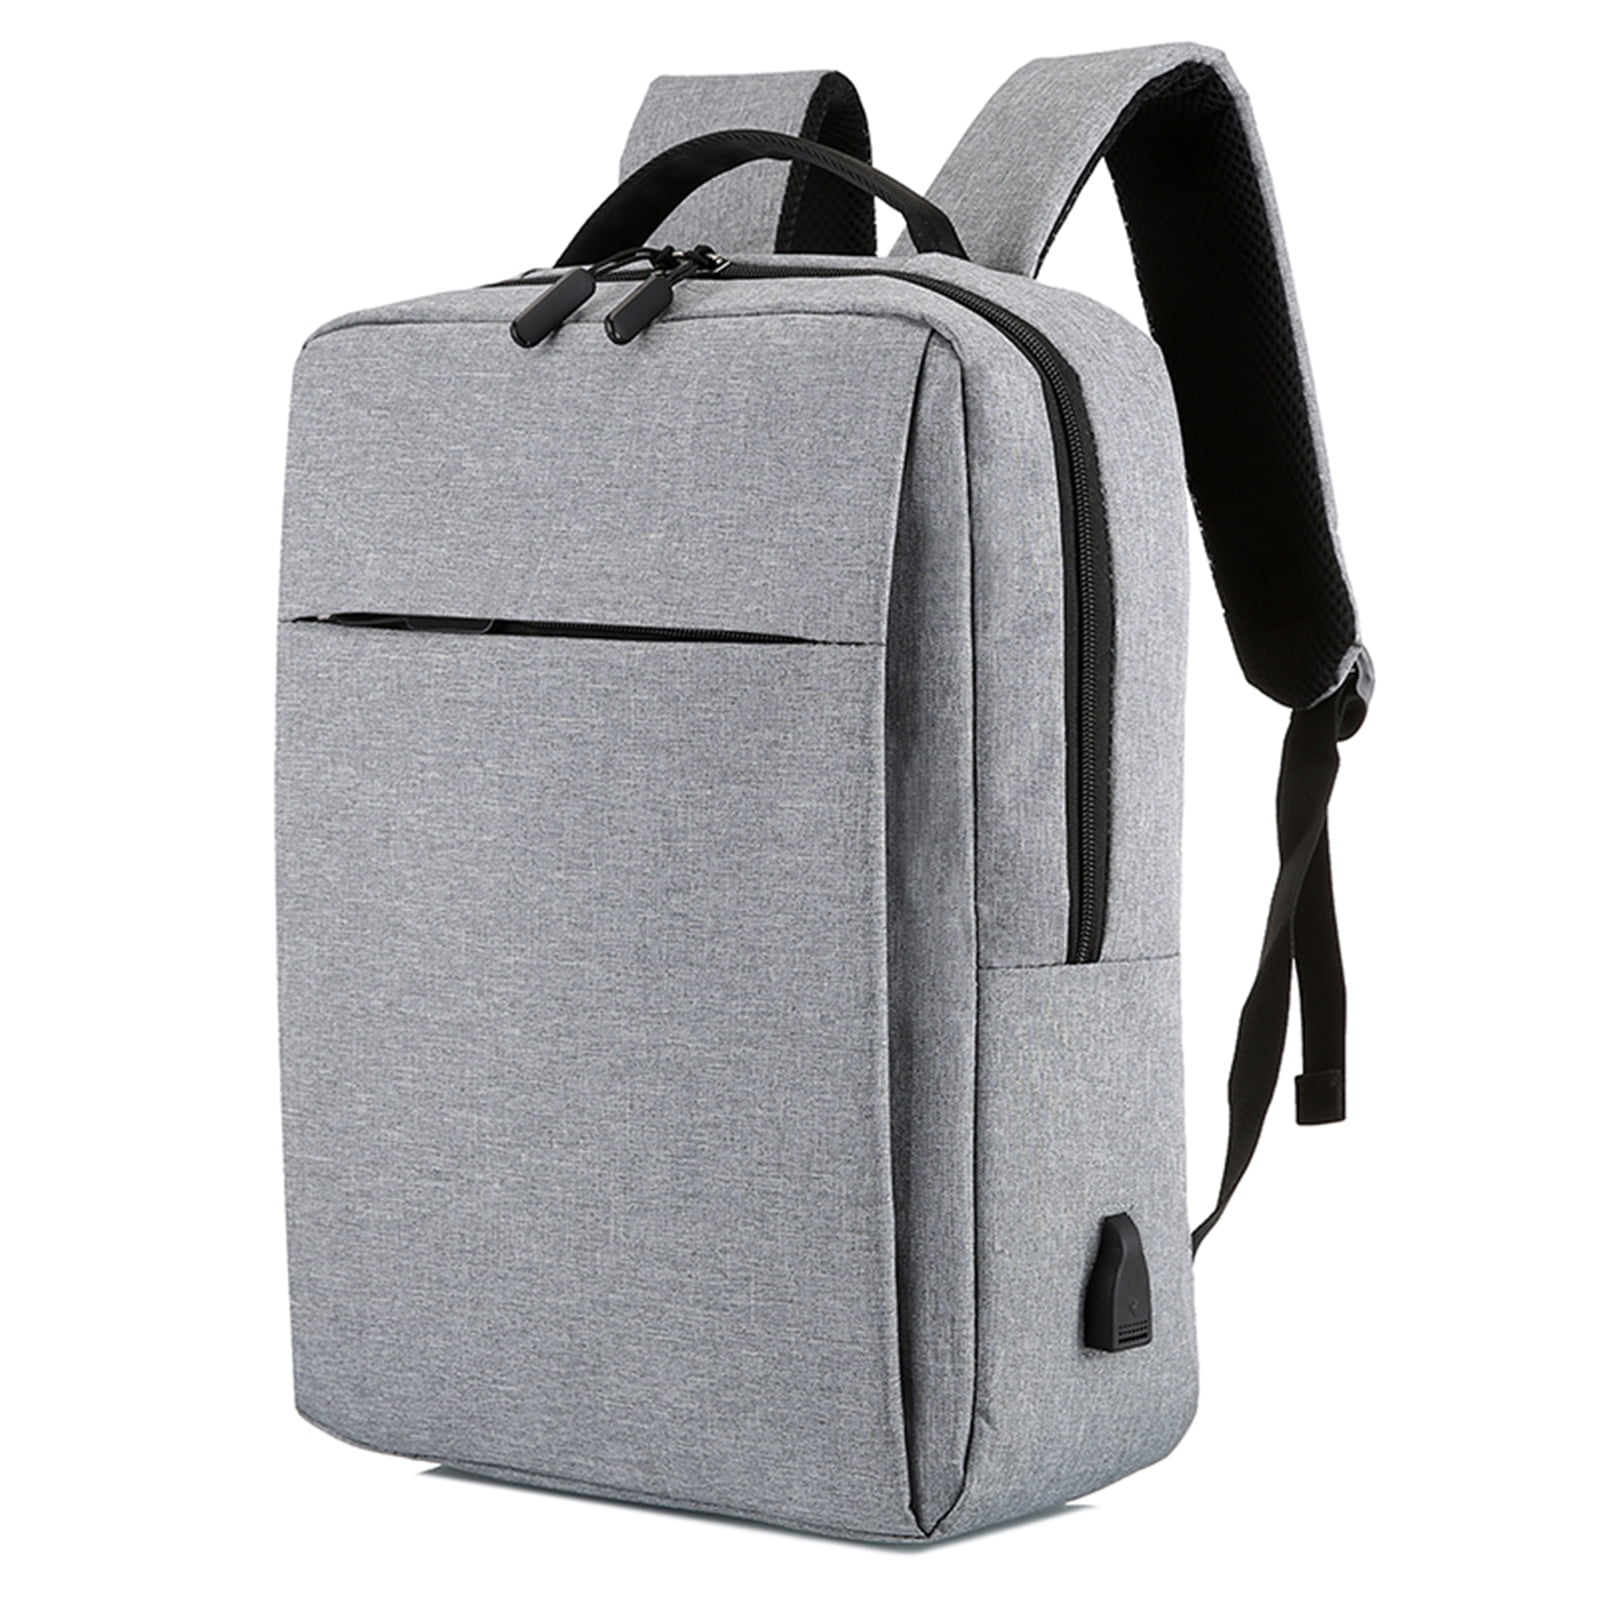 with USB Charging Port/Earphone Port Backpacks Laptop Bag & Outdoor Sports for Women Men Fits 17.3 Inch Notebook,School/Travel Rucksack Waterproof,Gray 